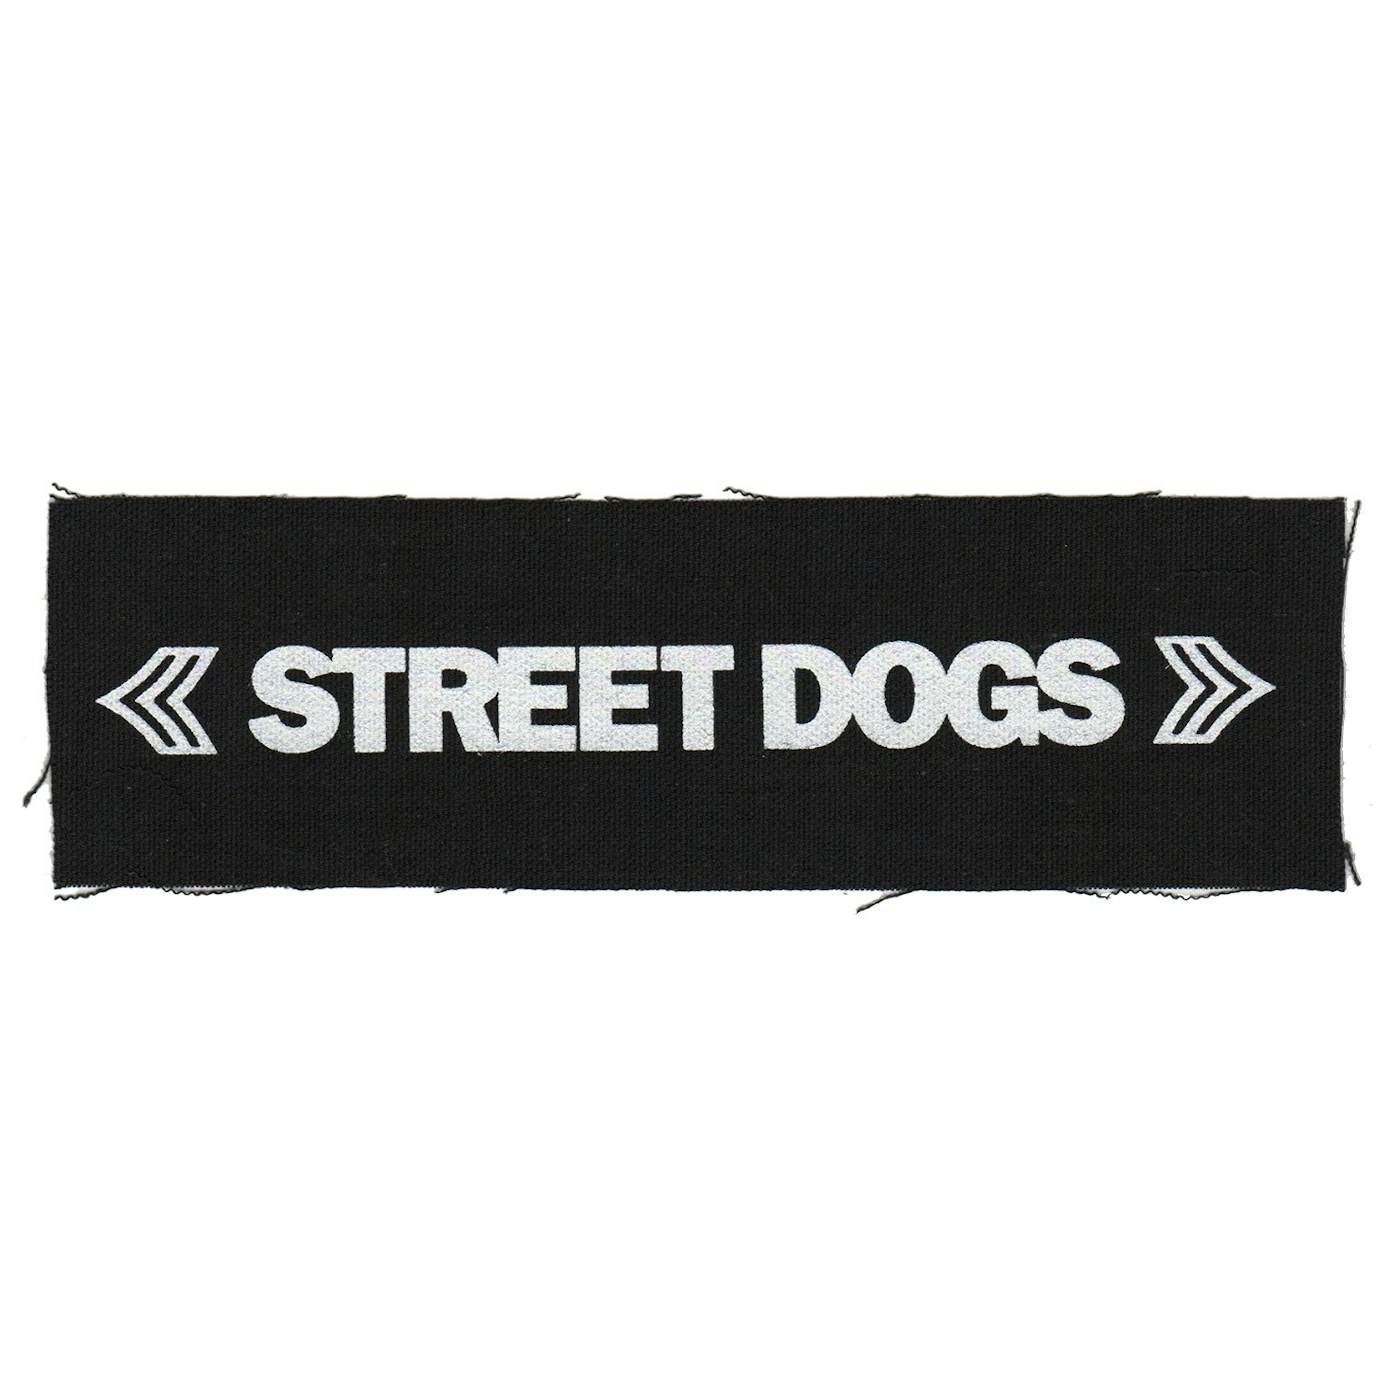 Street Dogs - Text Logo - Black - Patch - Cloth - Screenprinted - 8" x 3"